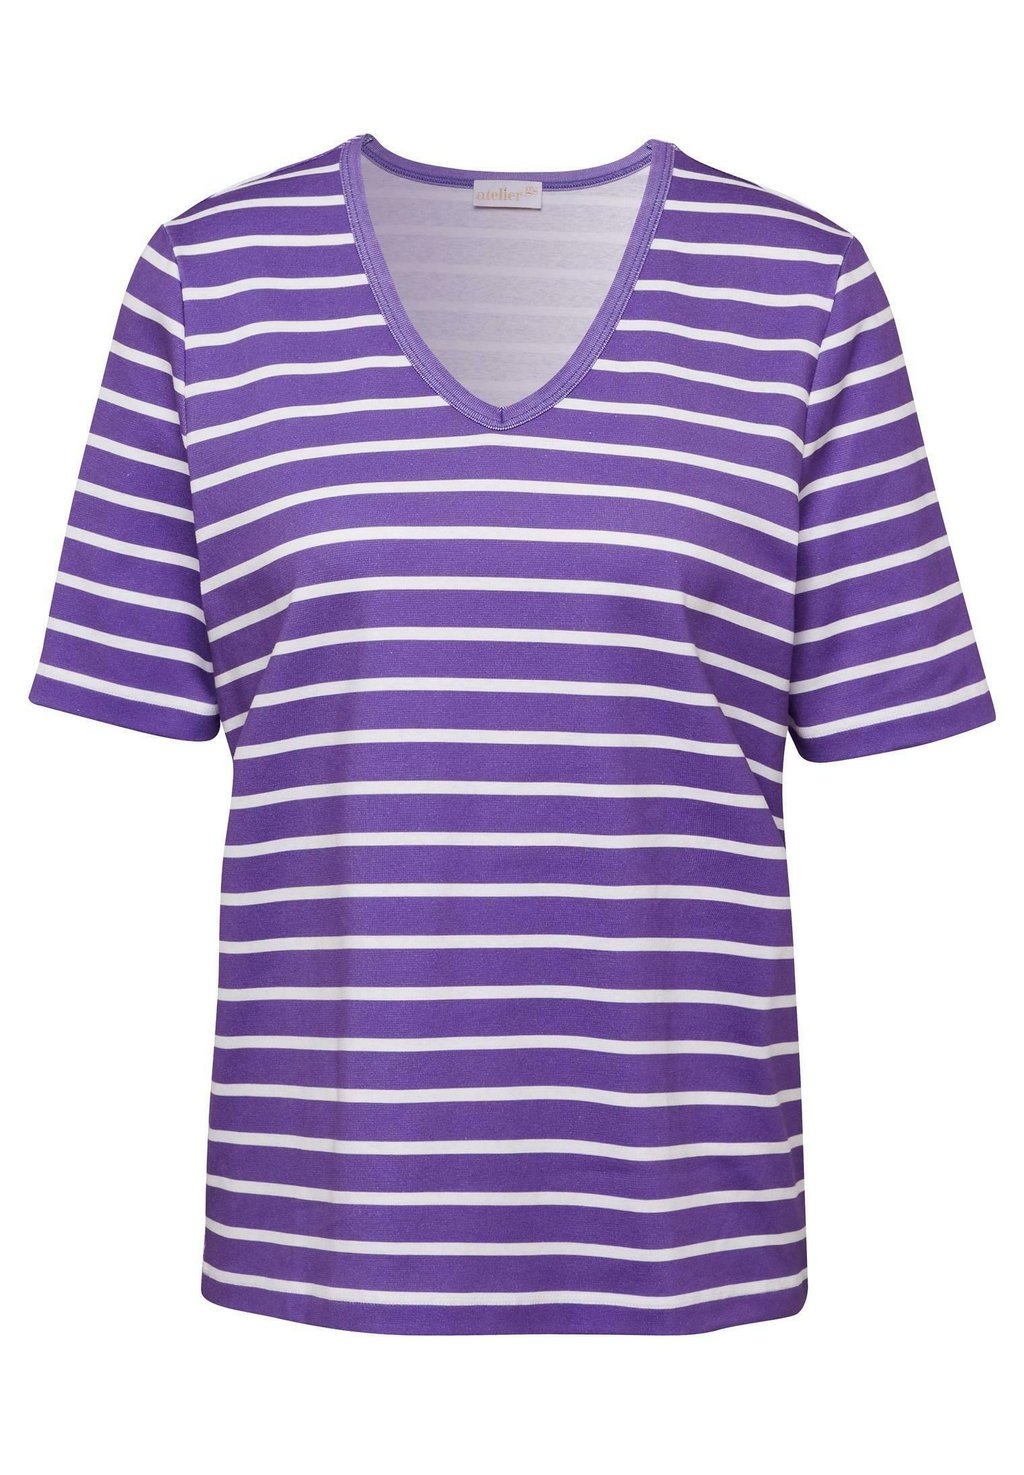 Футболка с принтом GOLDNER, цвет purple / white / striped